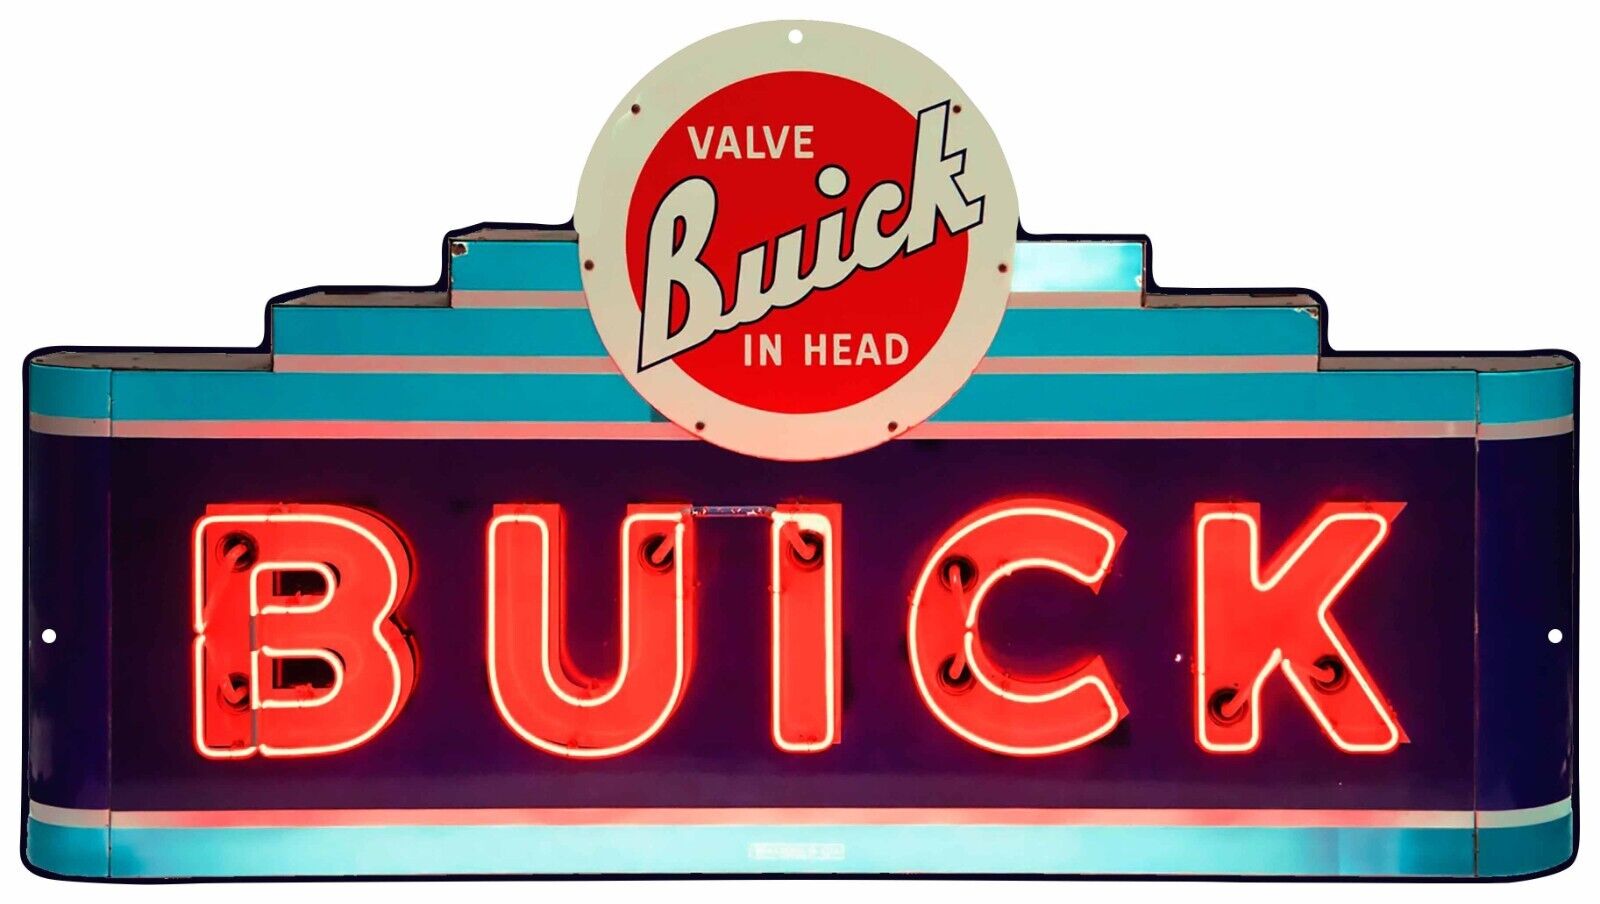 Buick Logo Neon Image Advertising Metal Sign (not real neon)